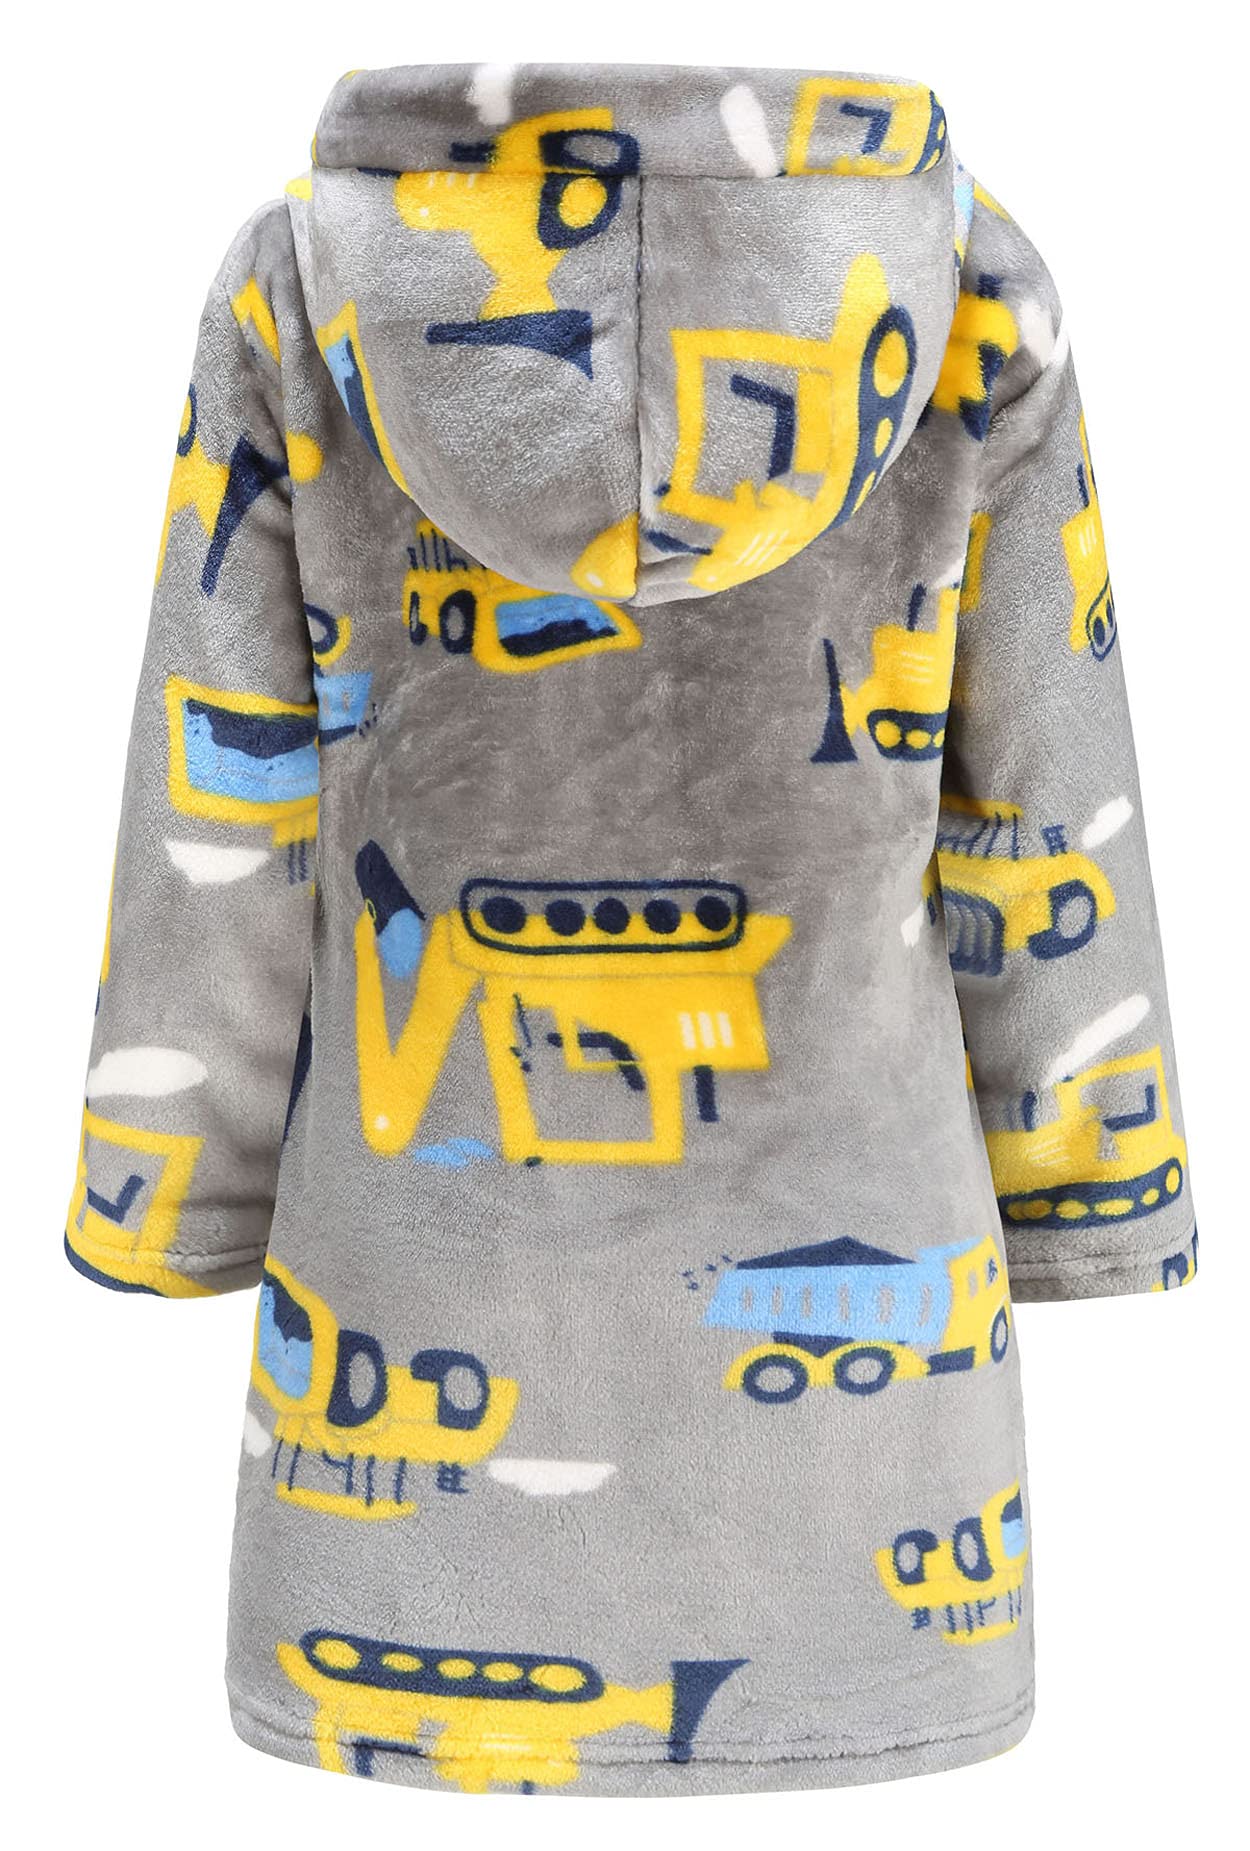 FunnyPaja Boys Soft Fleece Robes Plush Hooded Bathrobes Sleepwear for Kids 2-3 Years